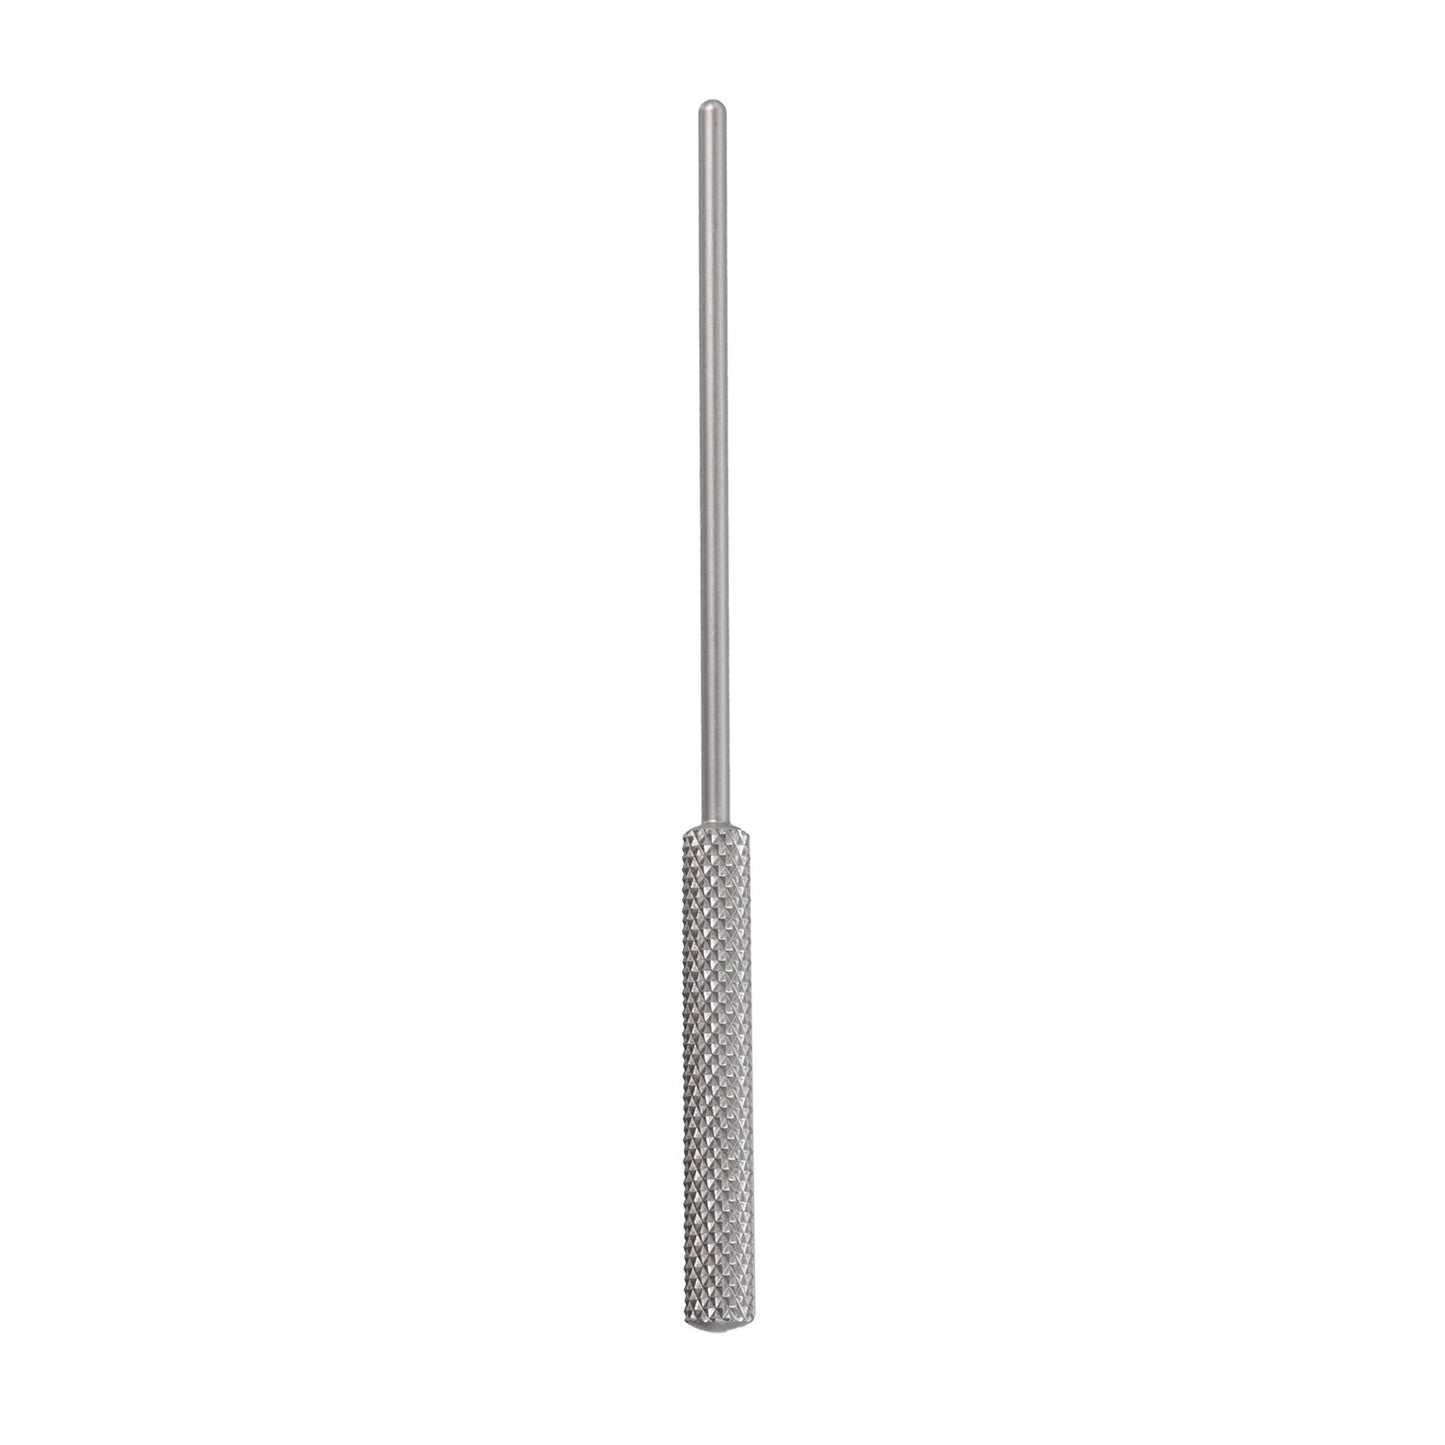 Cooley Coronary Dilator, aluminum,  3.0mm shaft